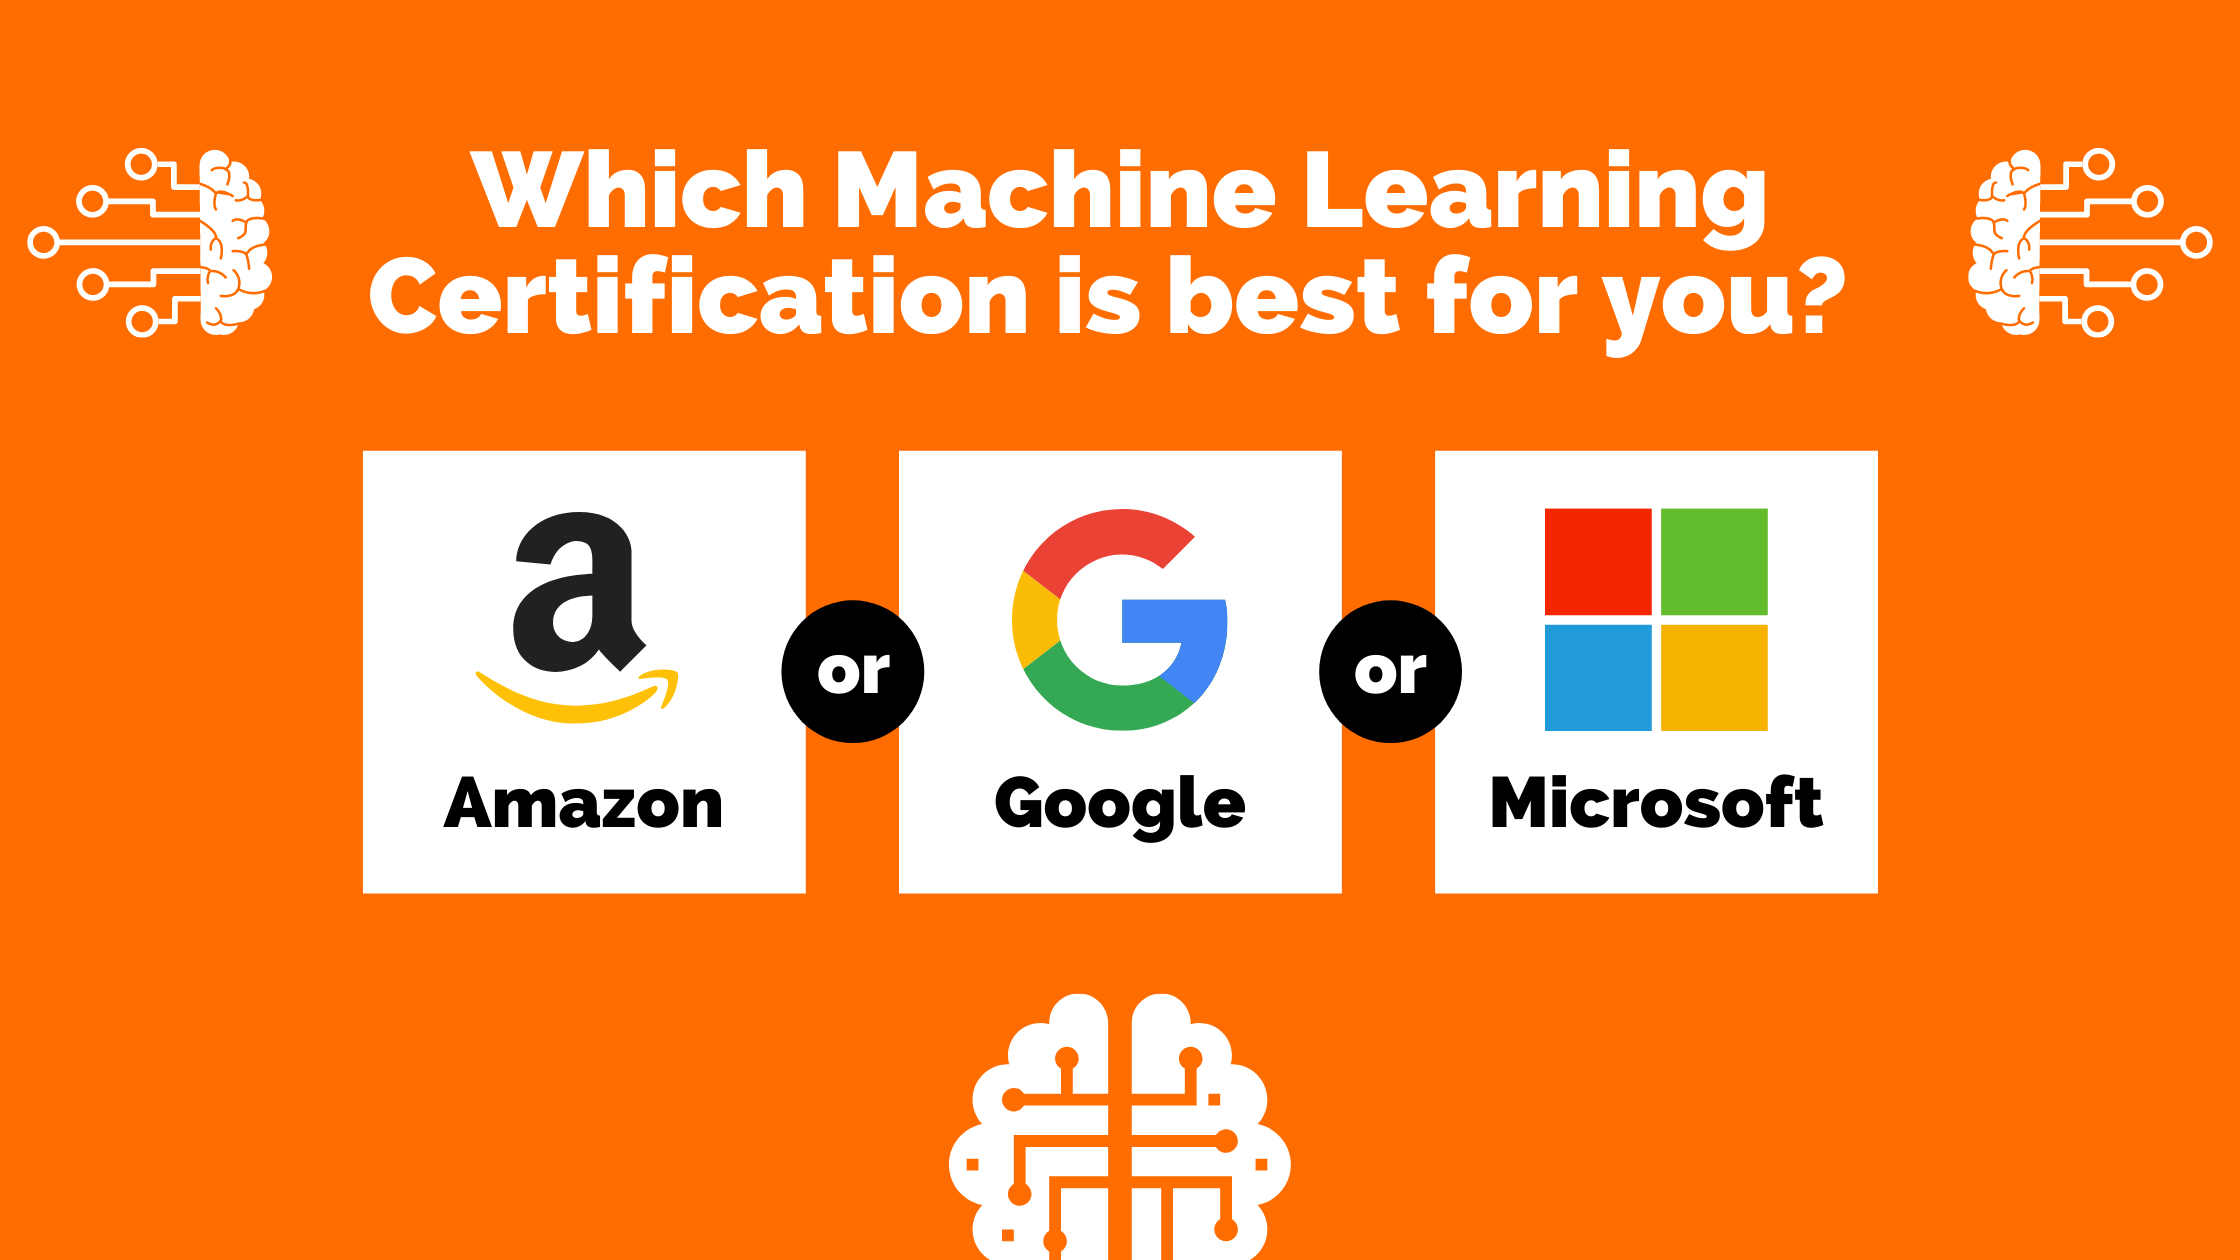 Best Machine Learning Certification